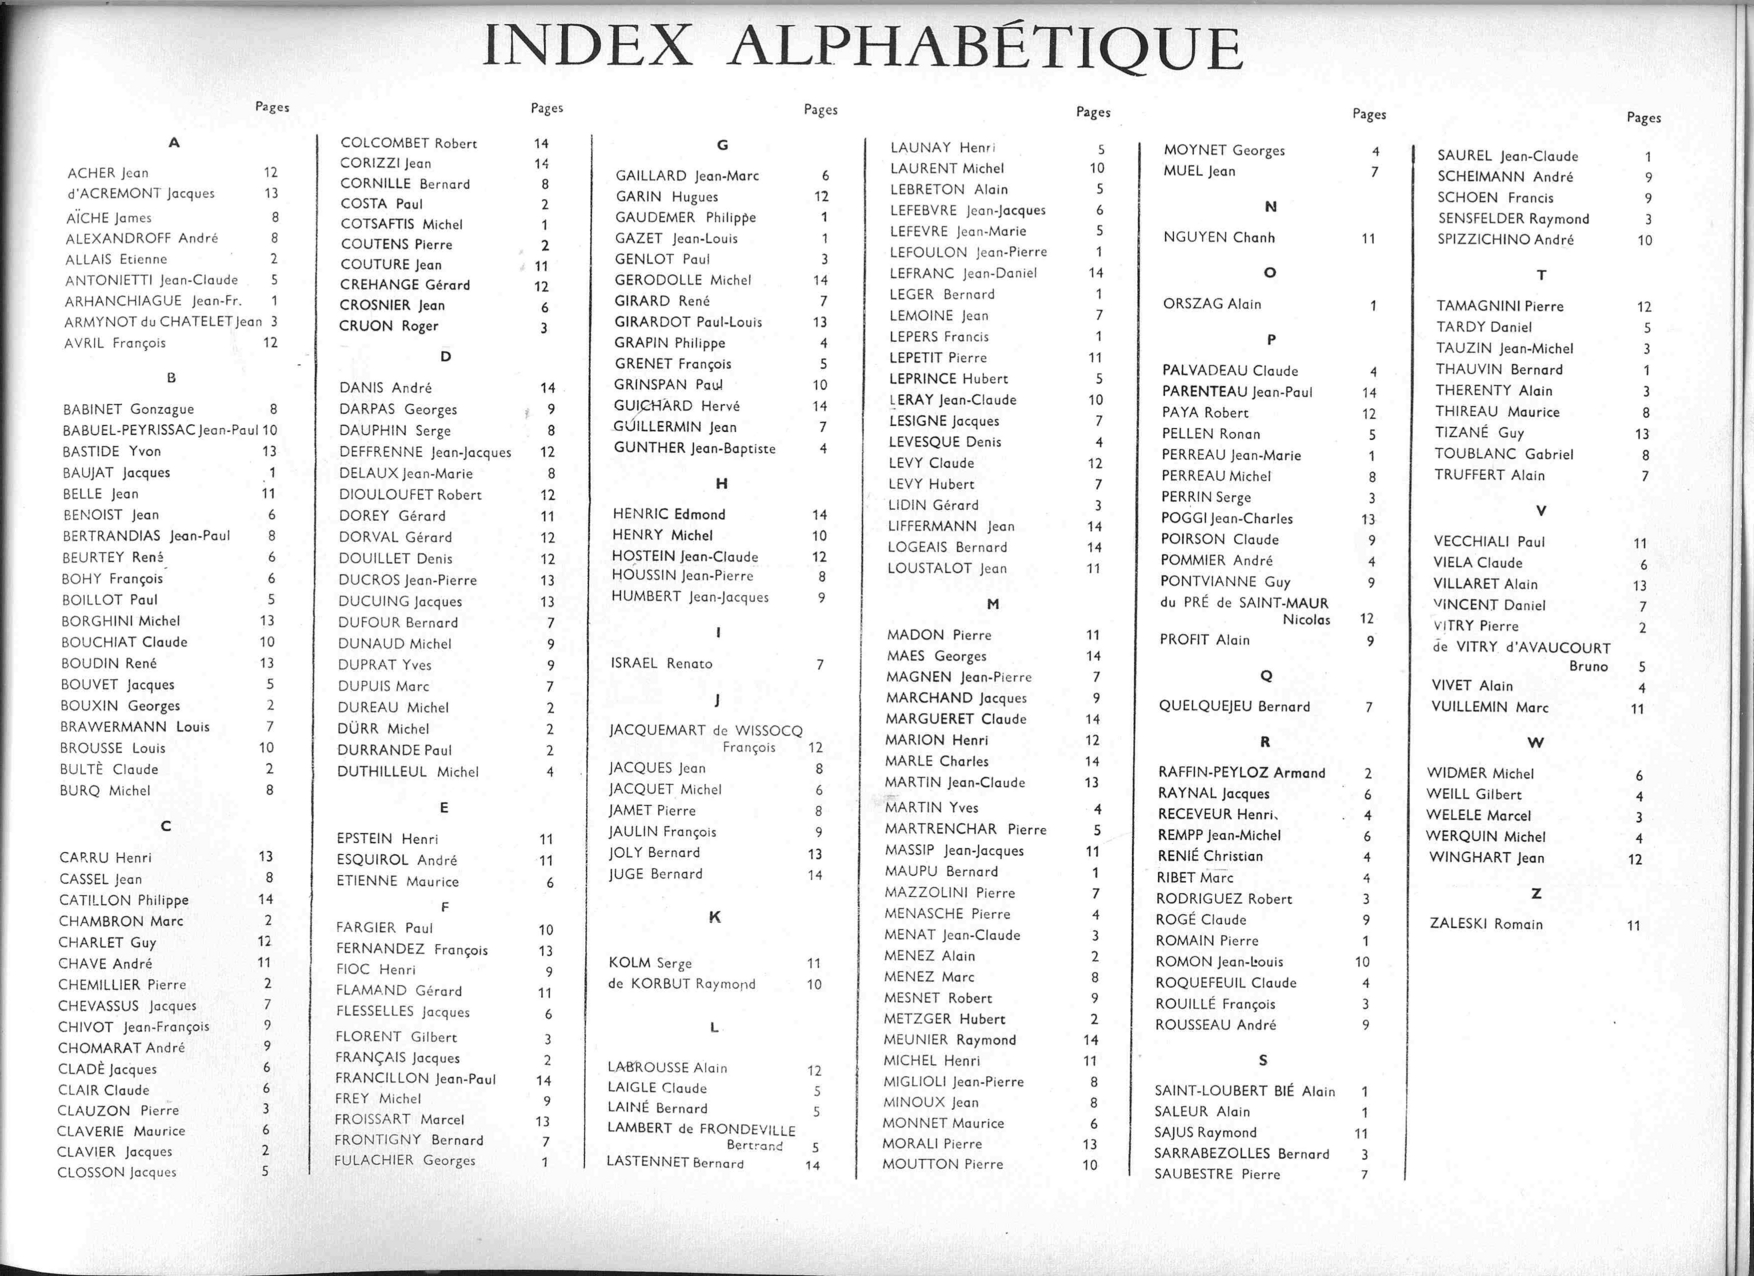 Album de promo X 1953, liste alphabtique des lves